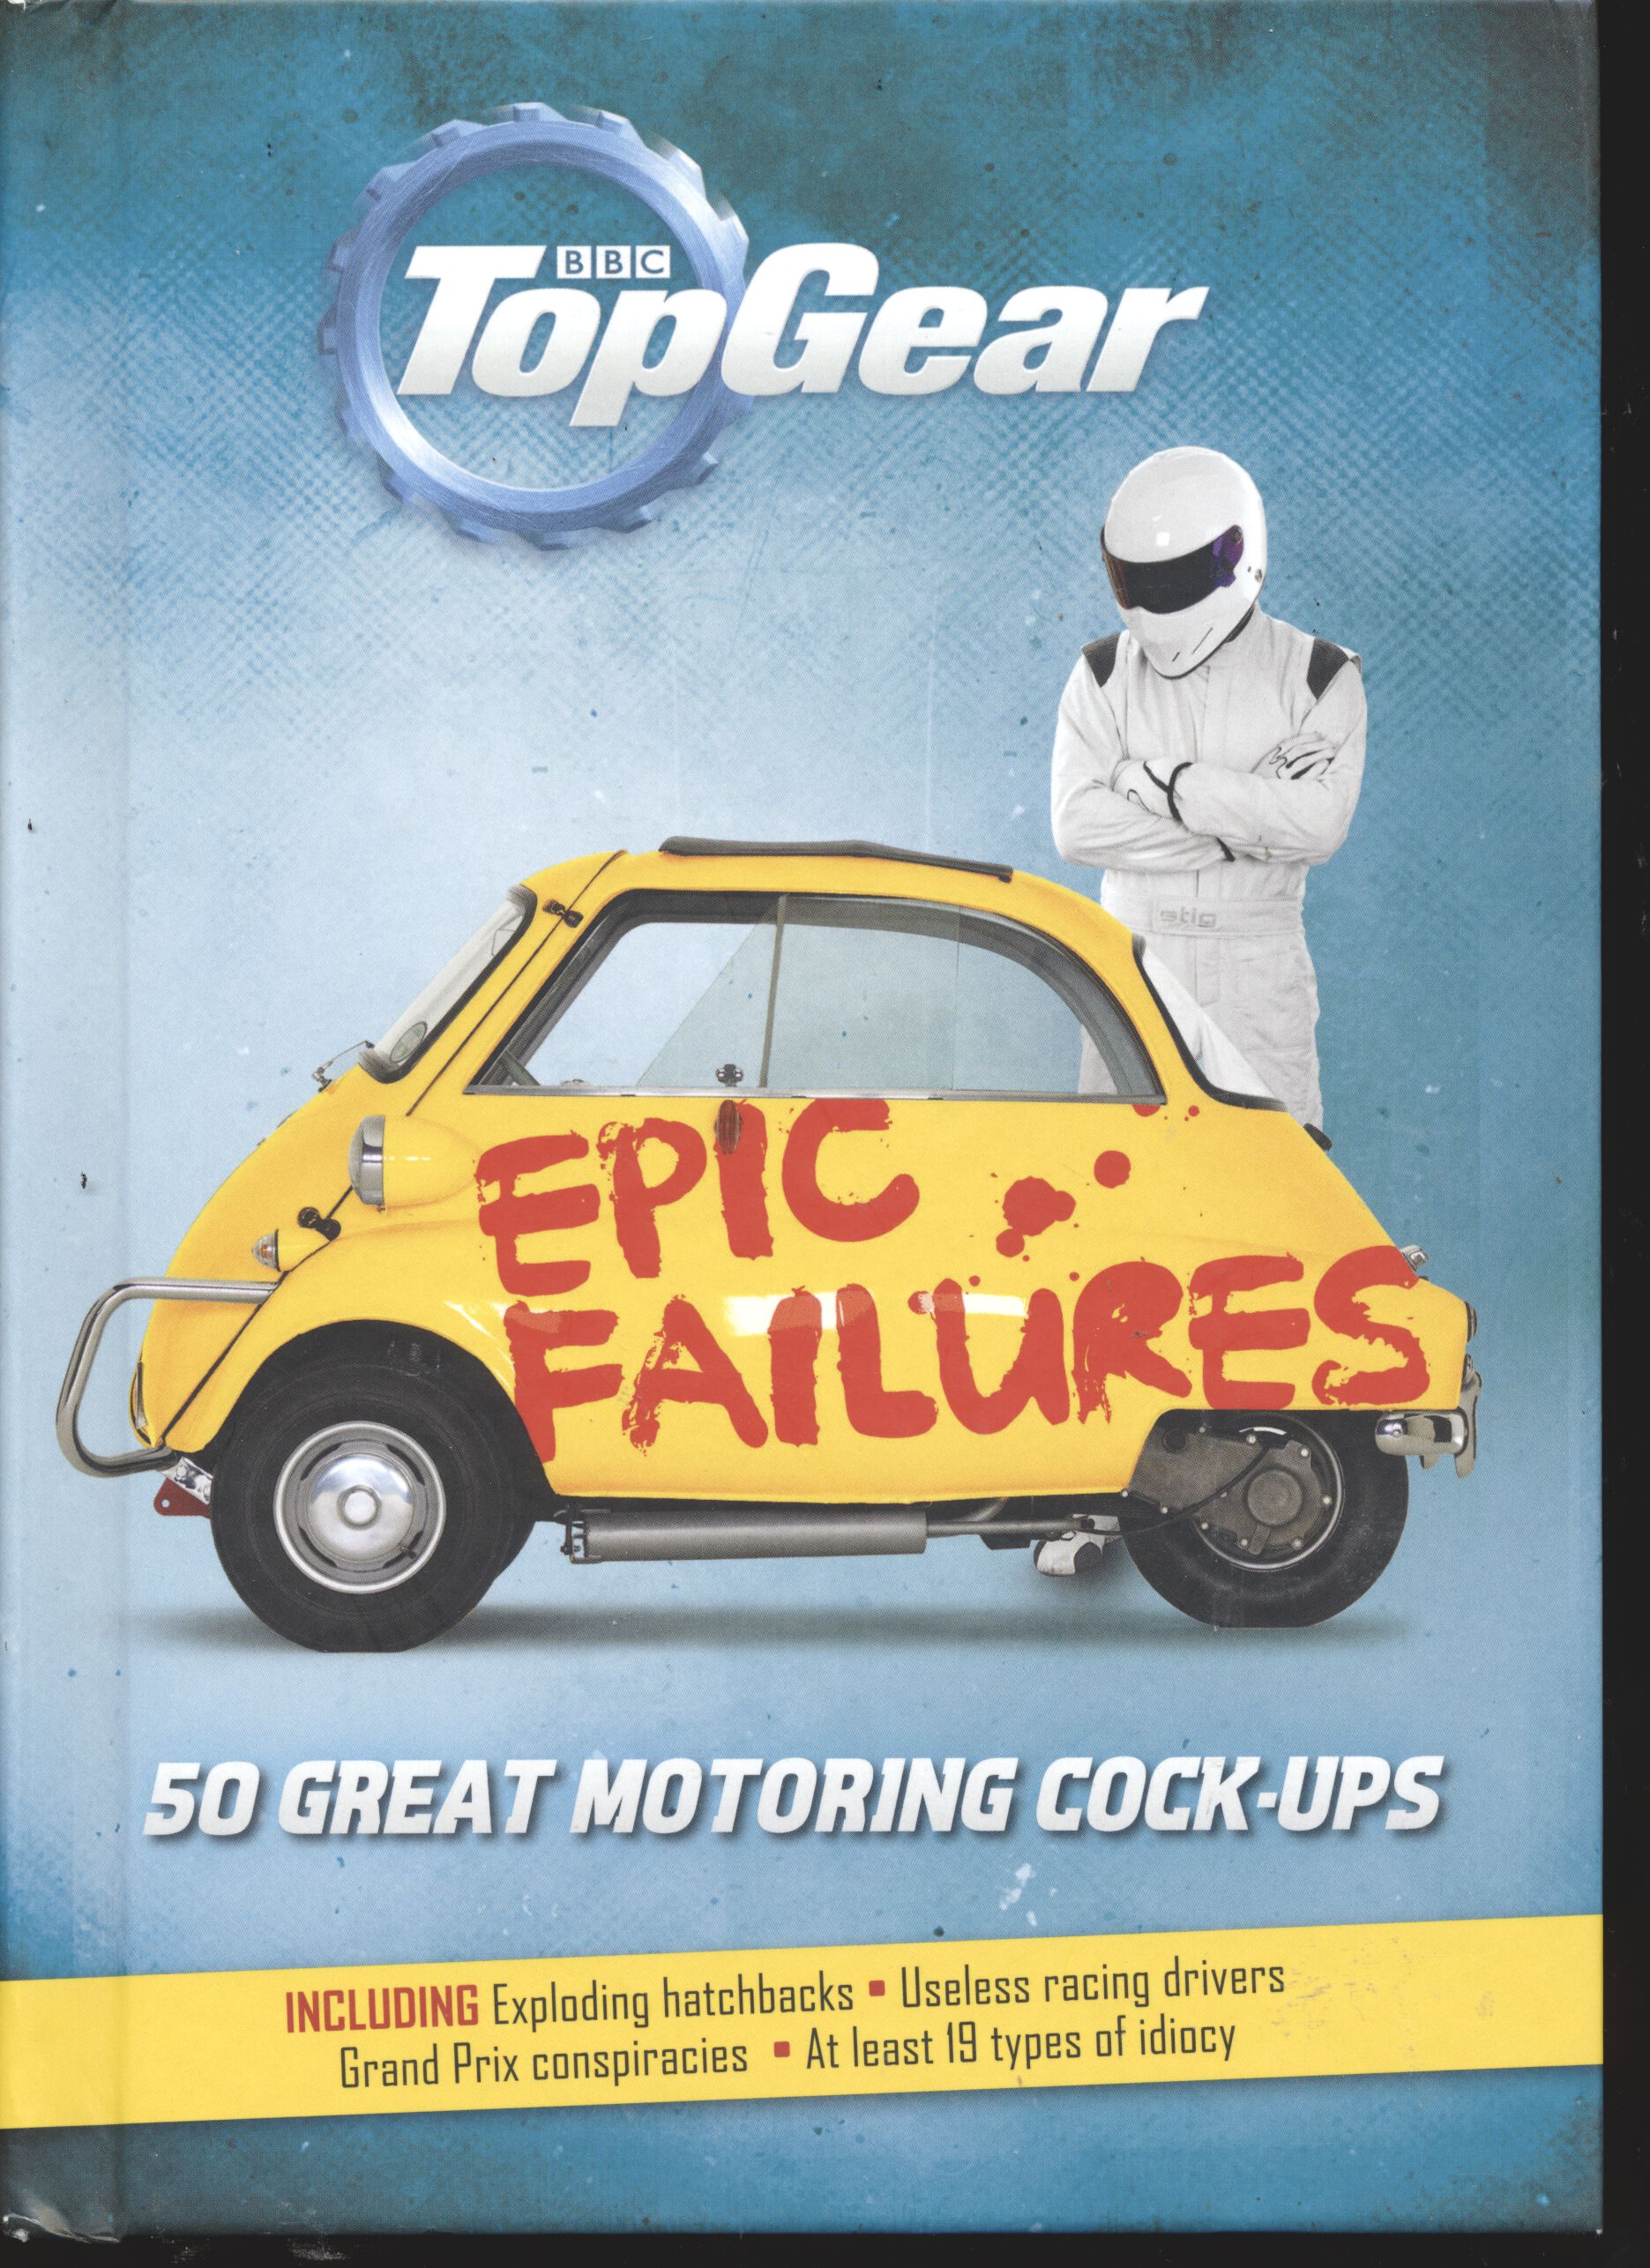 Top Gear - Epic Failures - Richard Porter